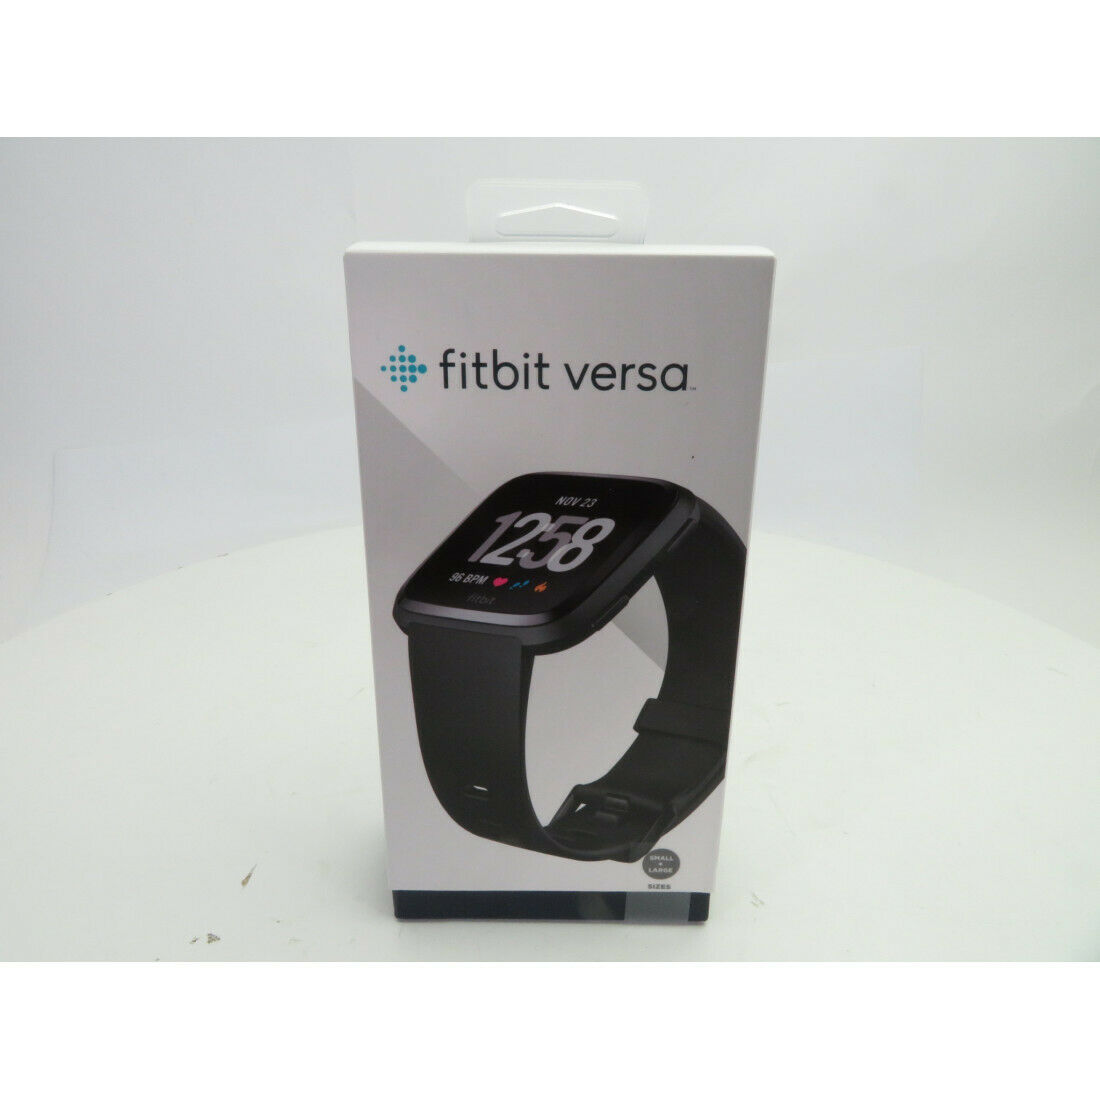 Fitbit Versa - Gunmetal - smart watch with band - black - Bluetooth - image 1 of 11